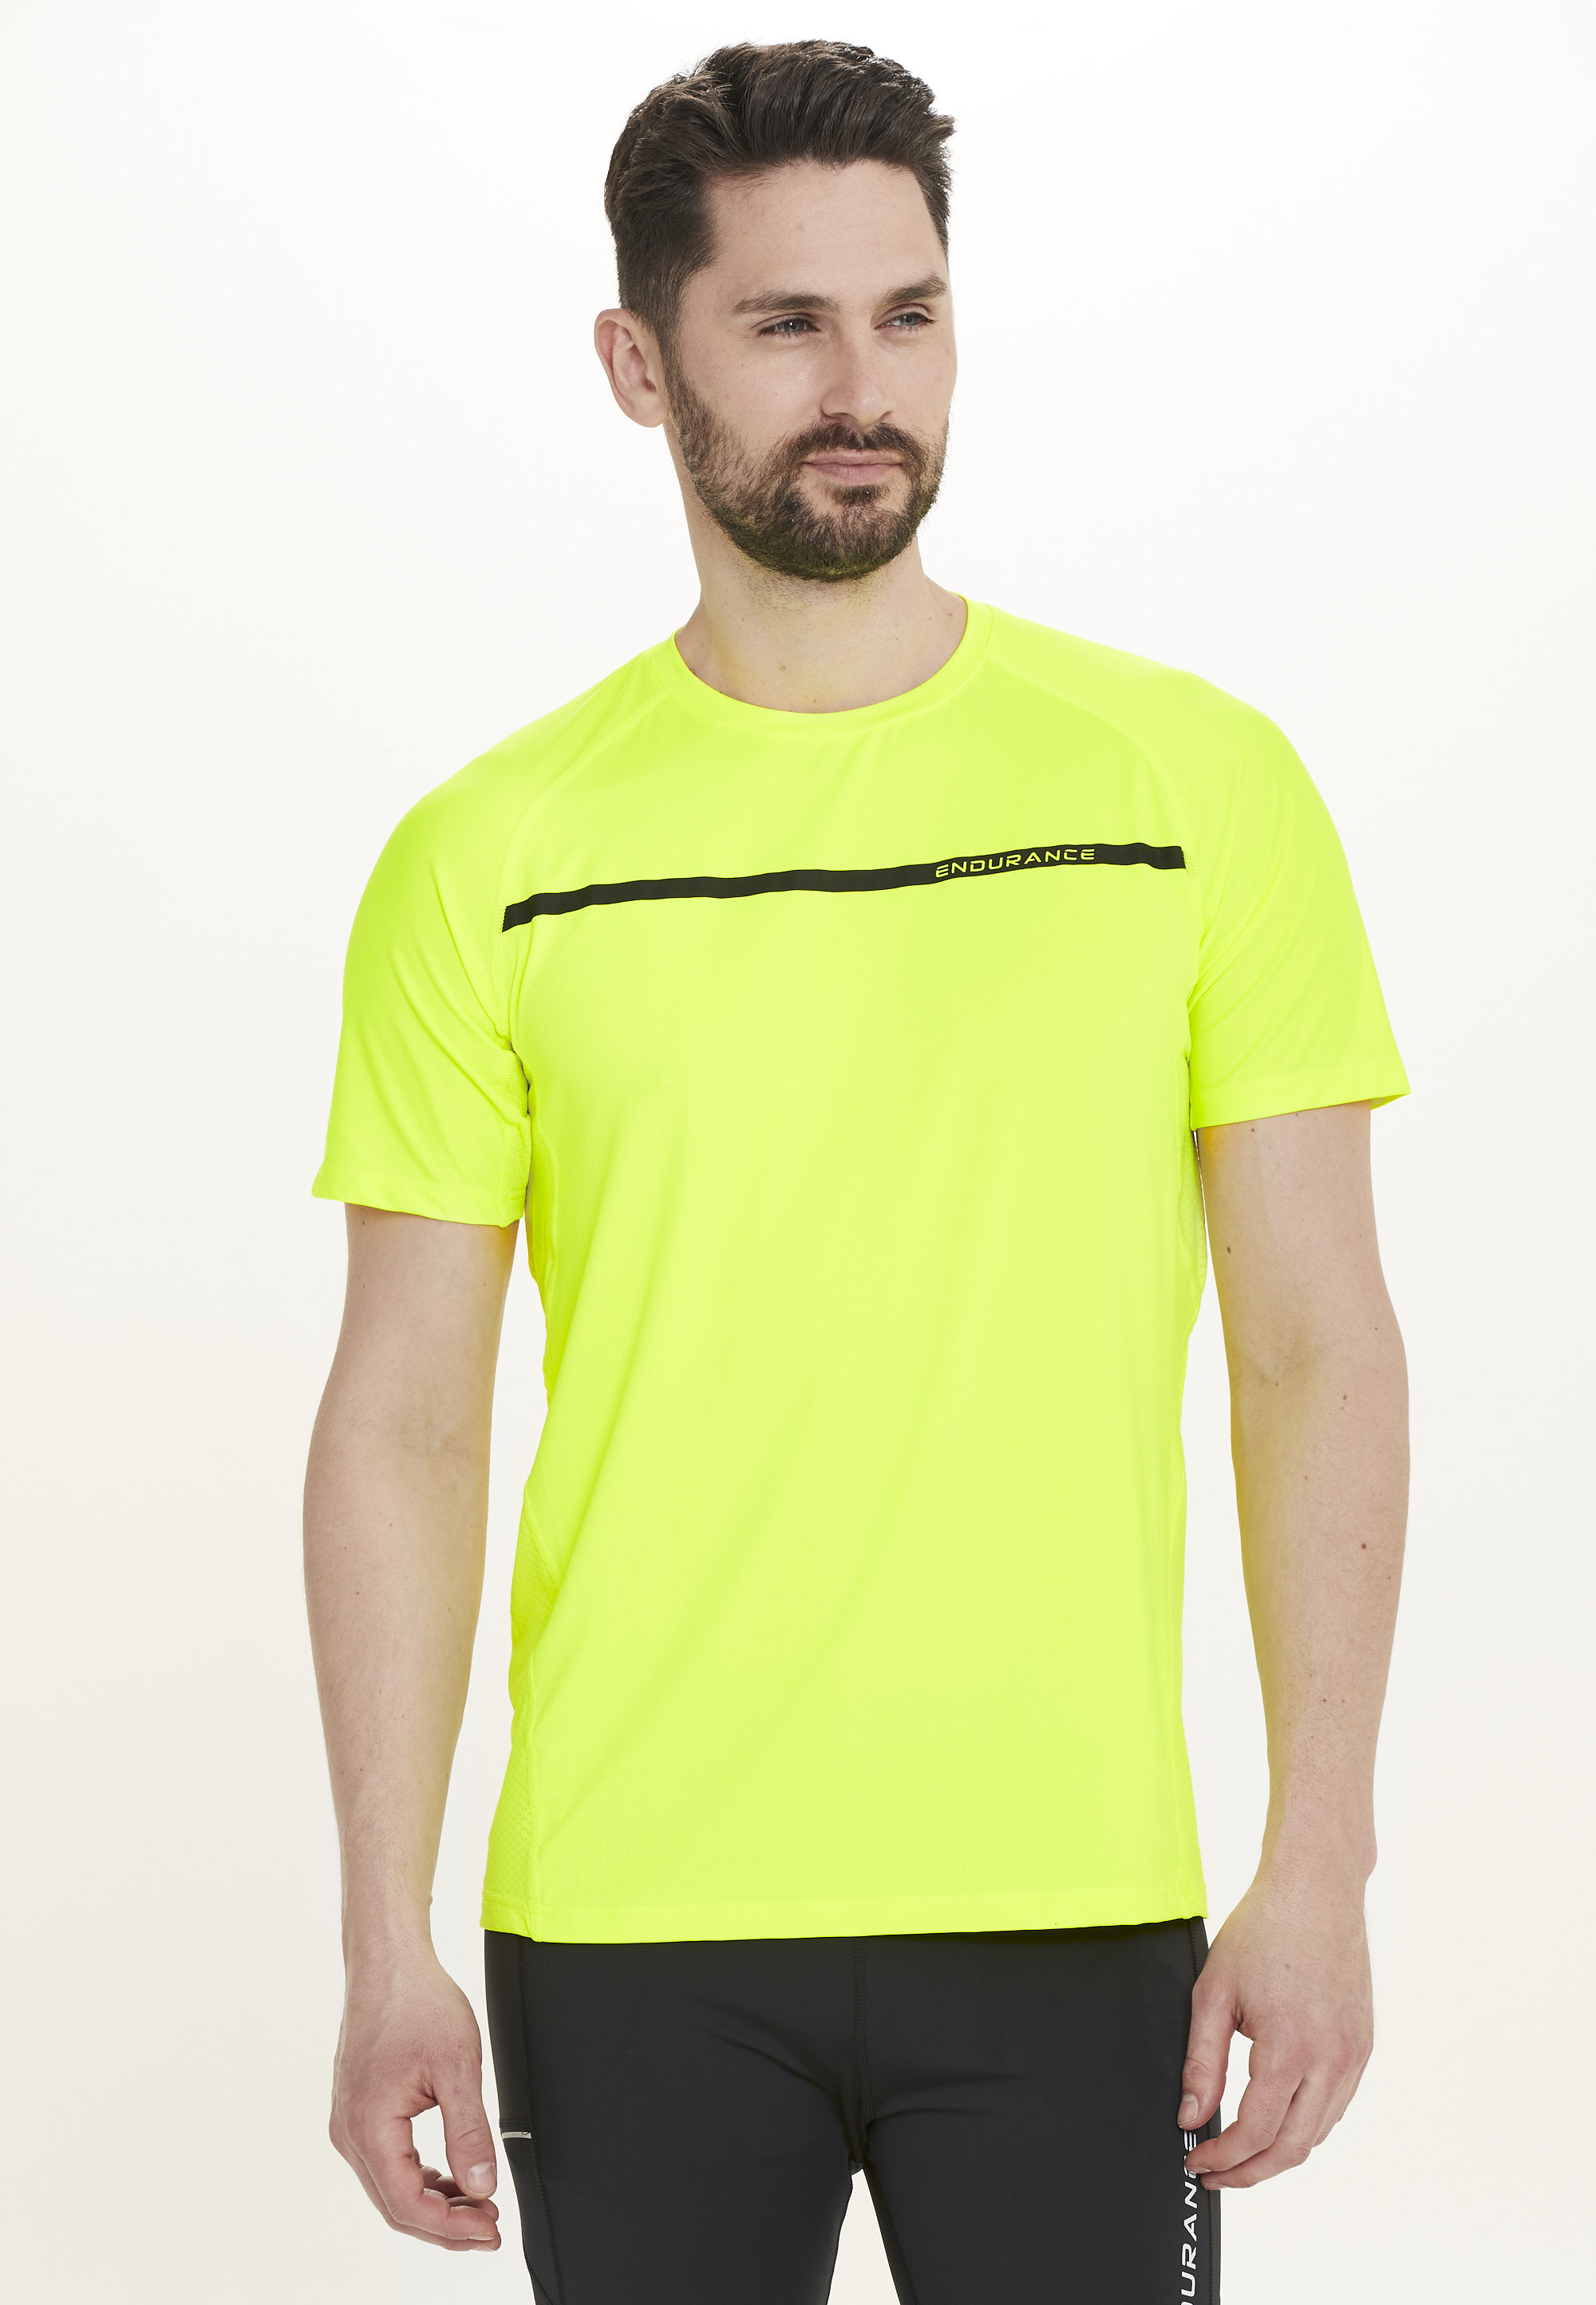 Endurance Herren T-Shirt Serzo aus schnelltrocknendem Funktionsstretch 3069 Rosin, XL